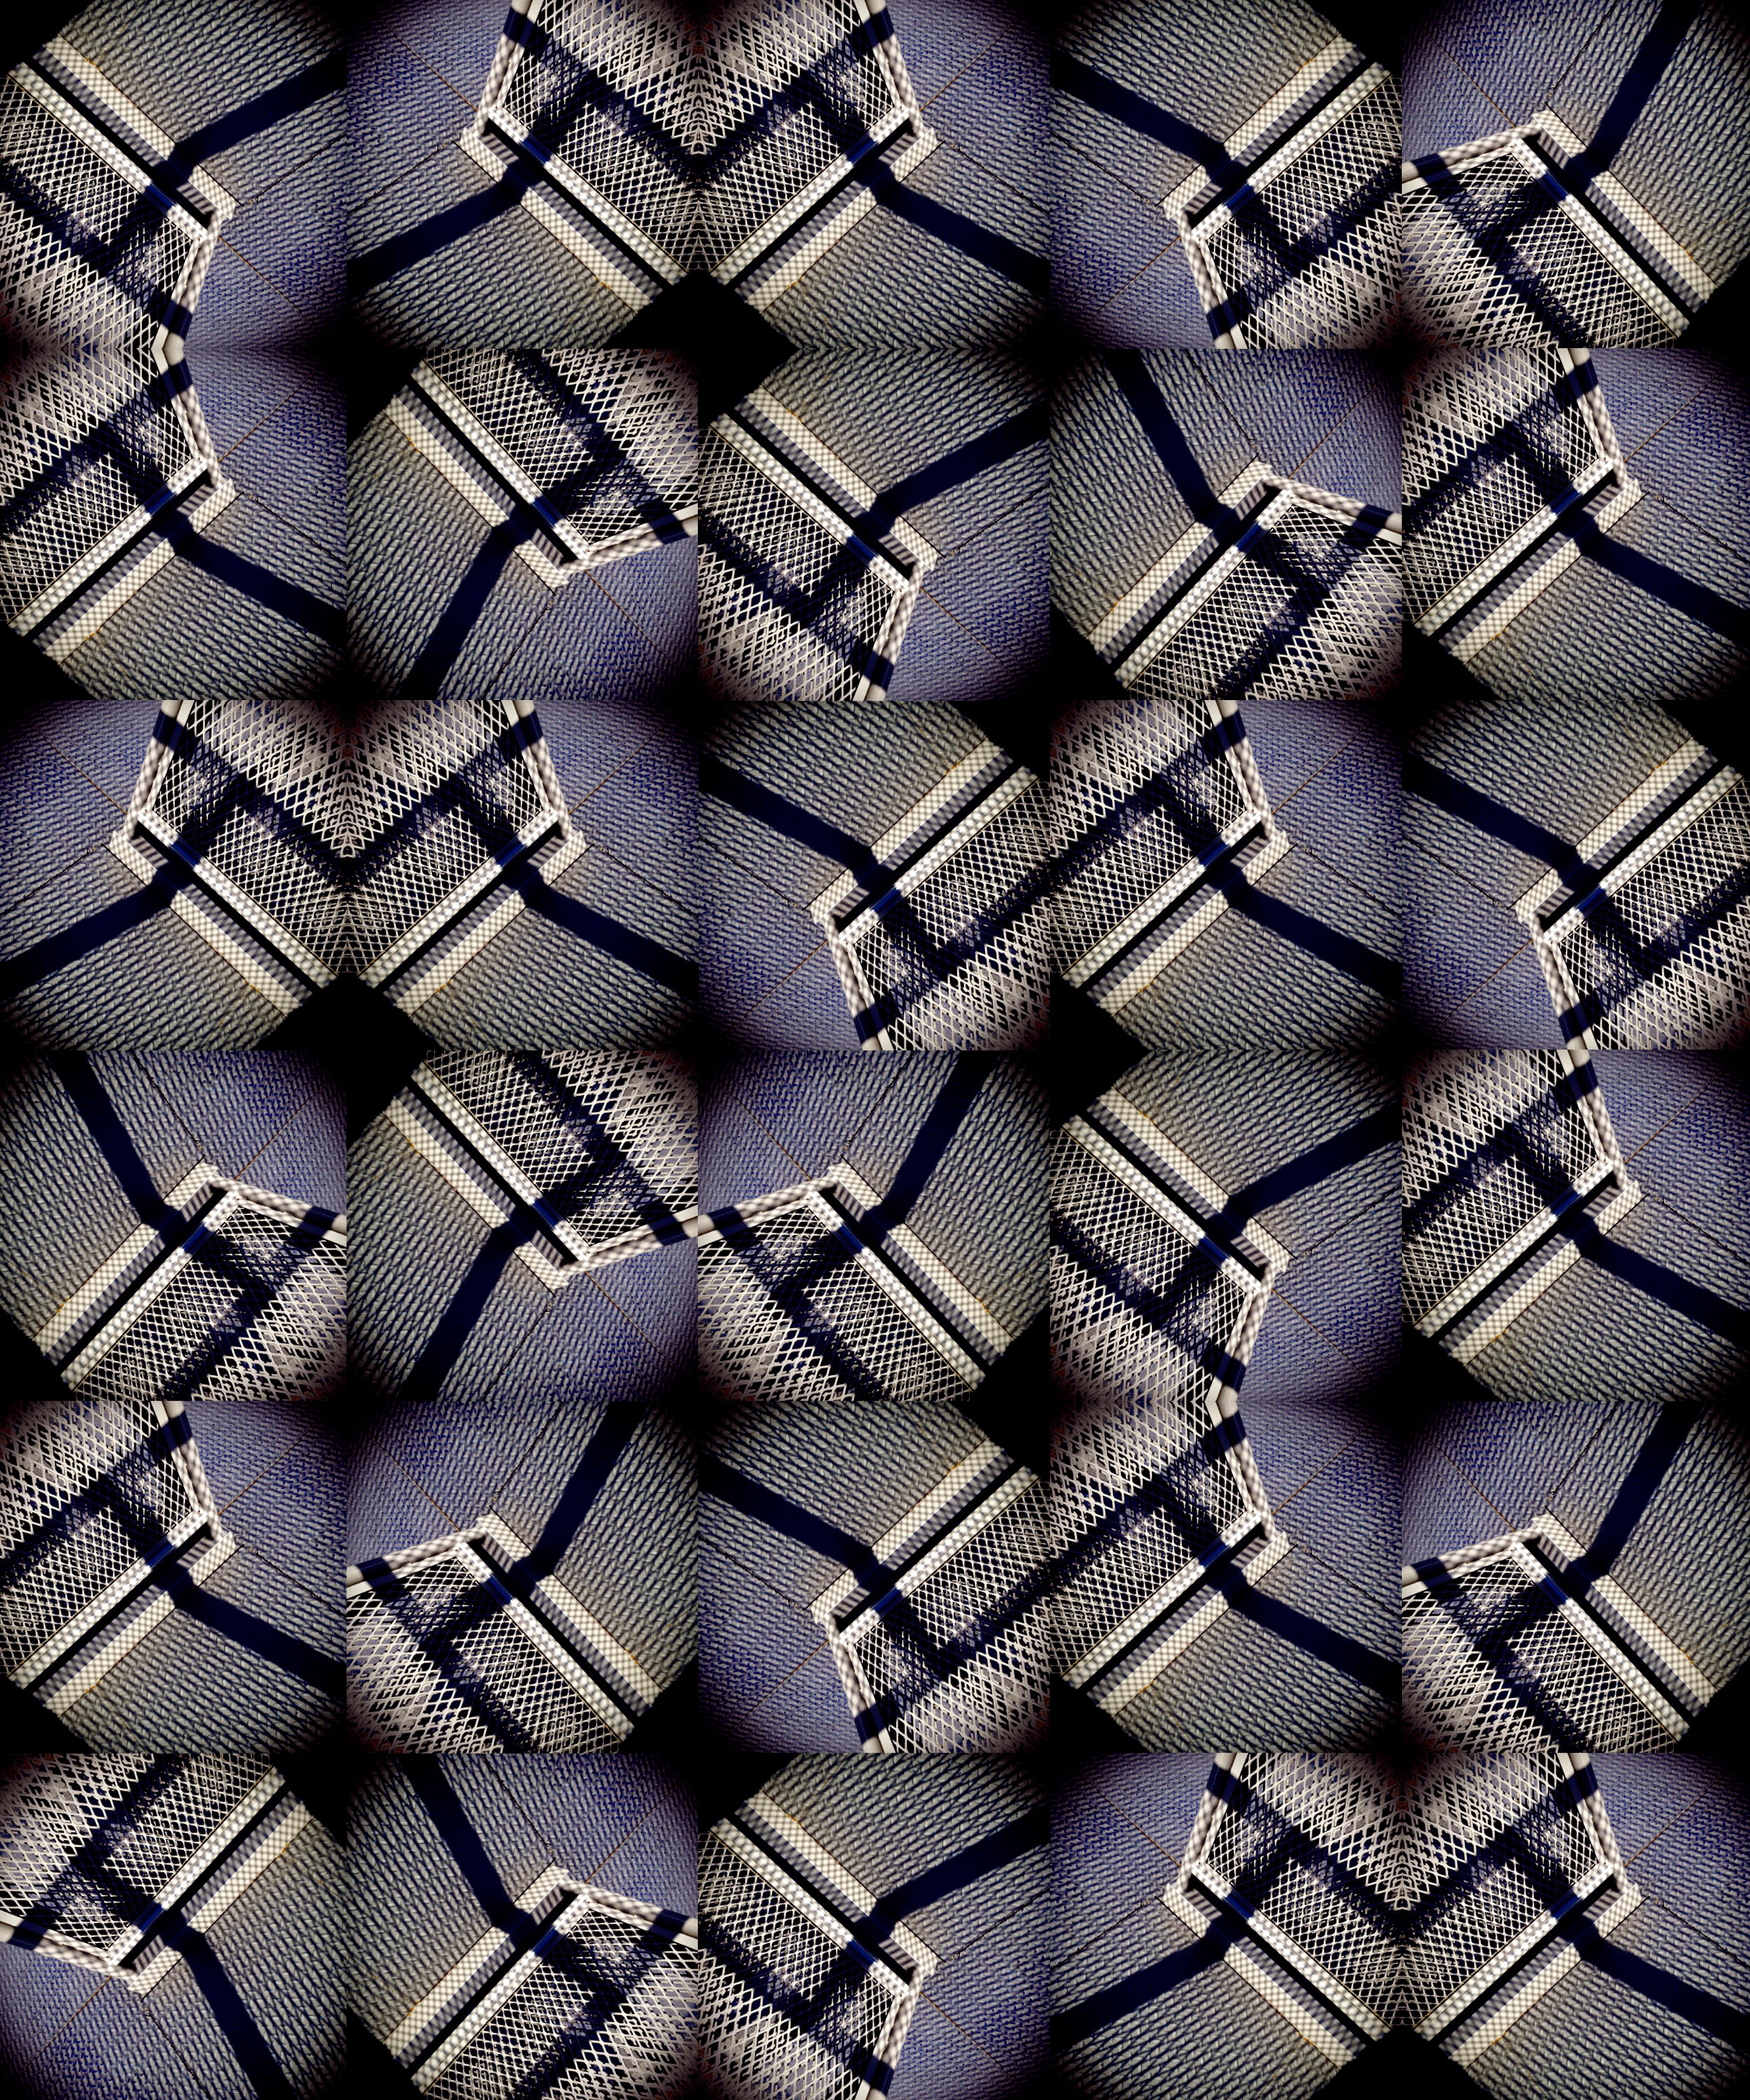 5x6 Grid (IMG_1119).jpg